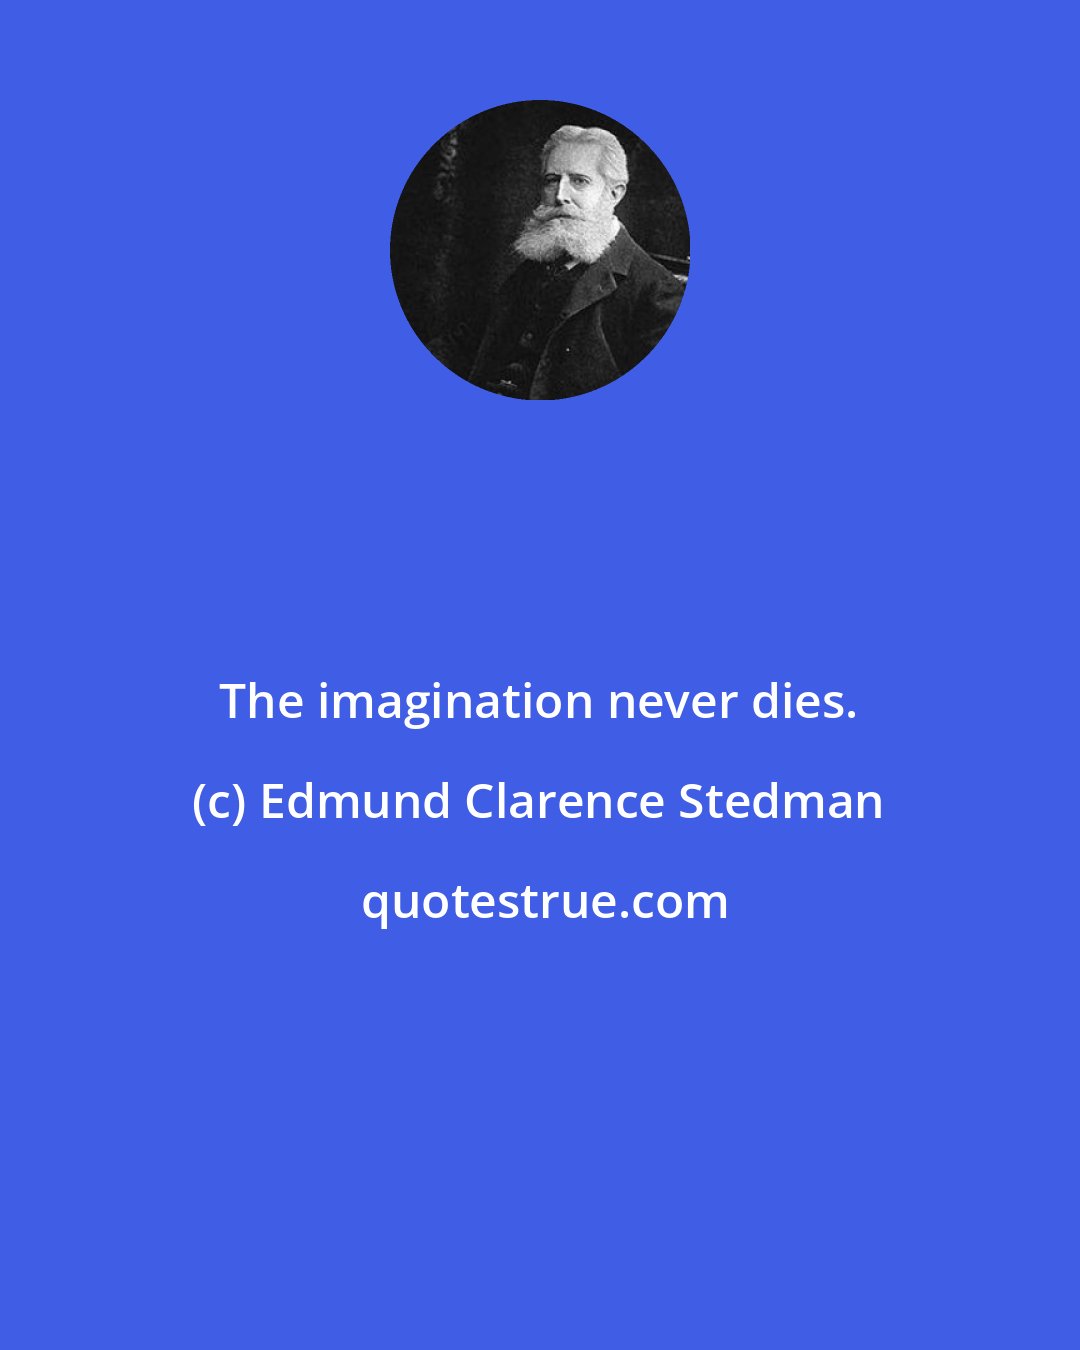 Edmund Clarence Stedman: The imagination never dies.